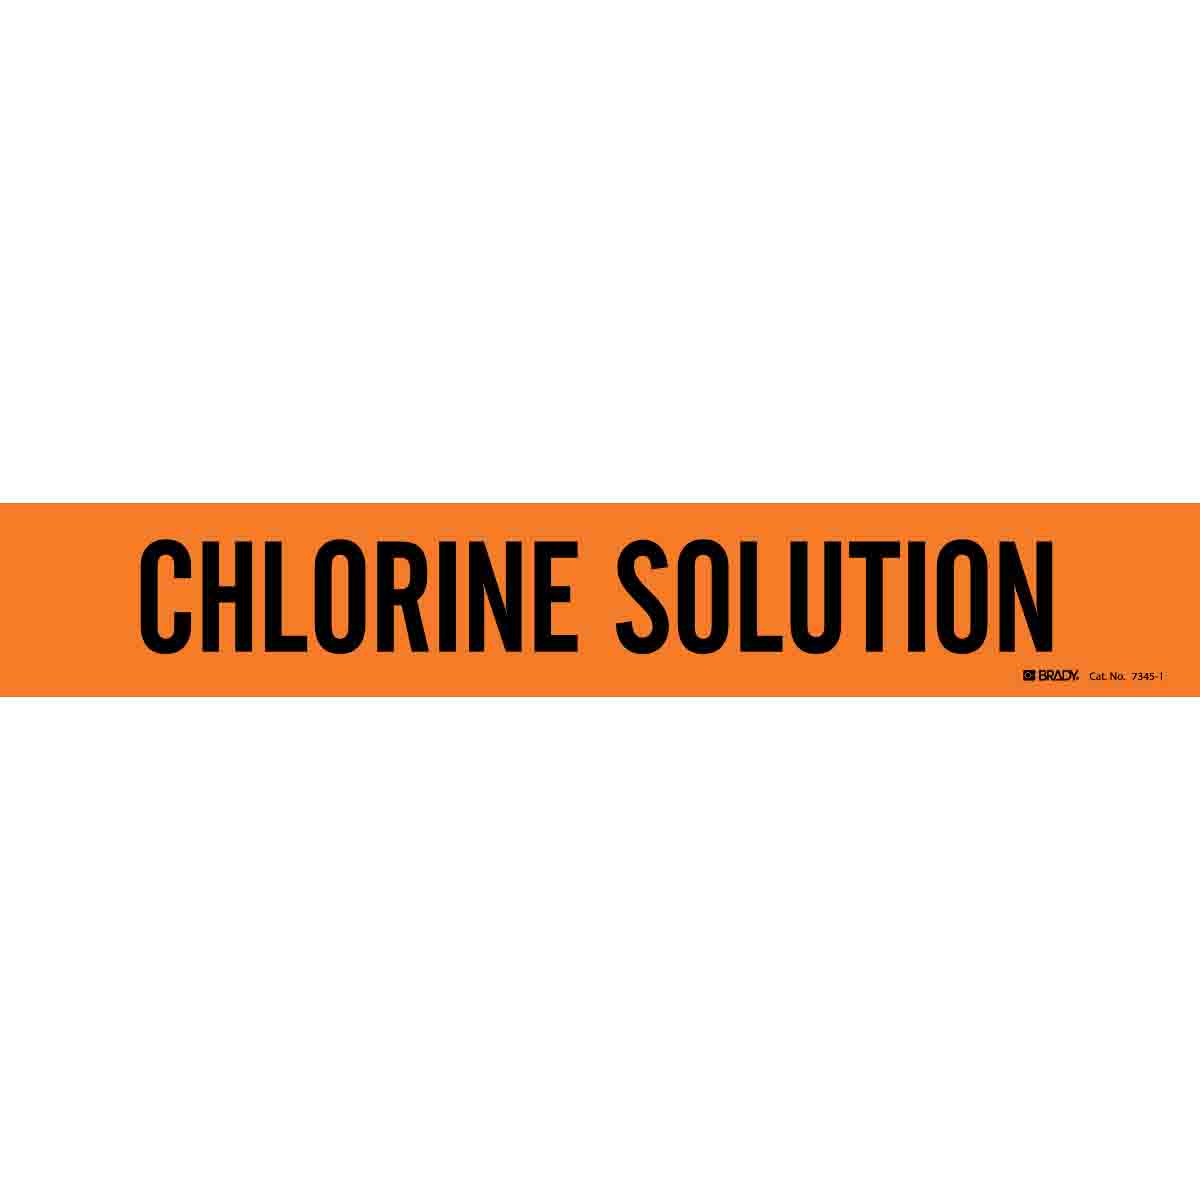 CHLORINE SOLUTION BLACK / ORANGE